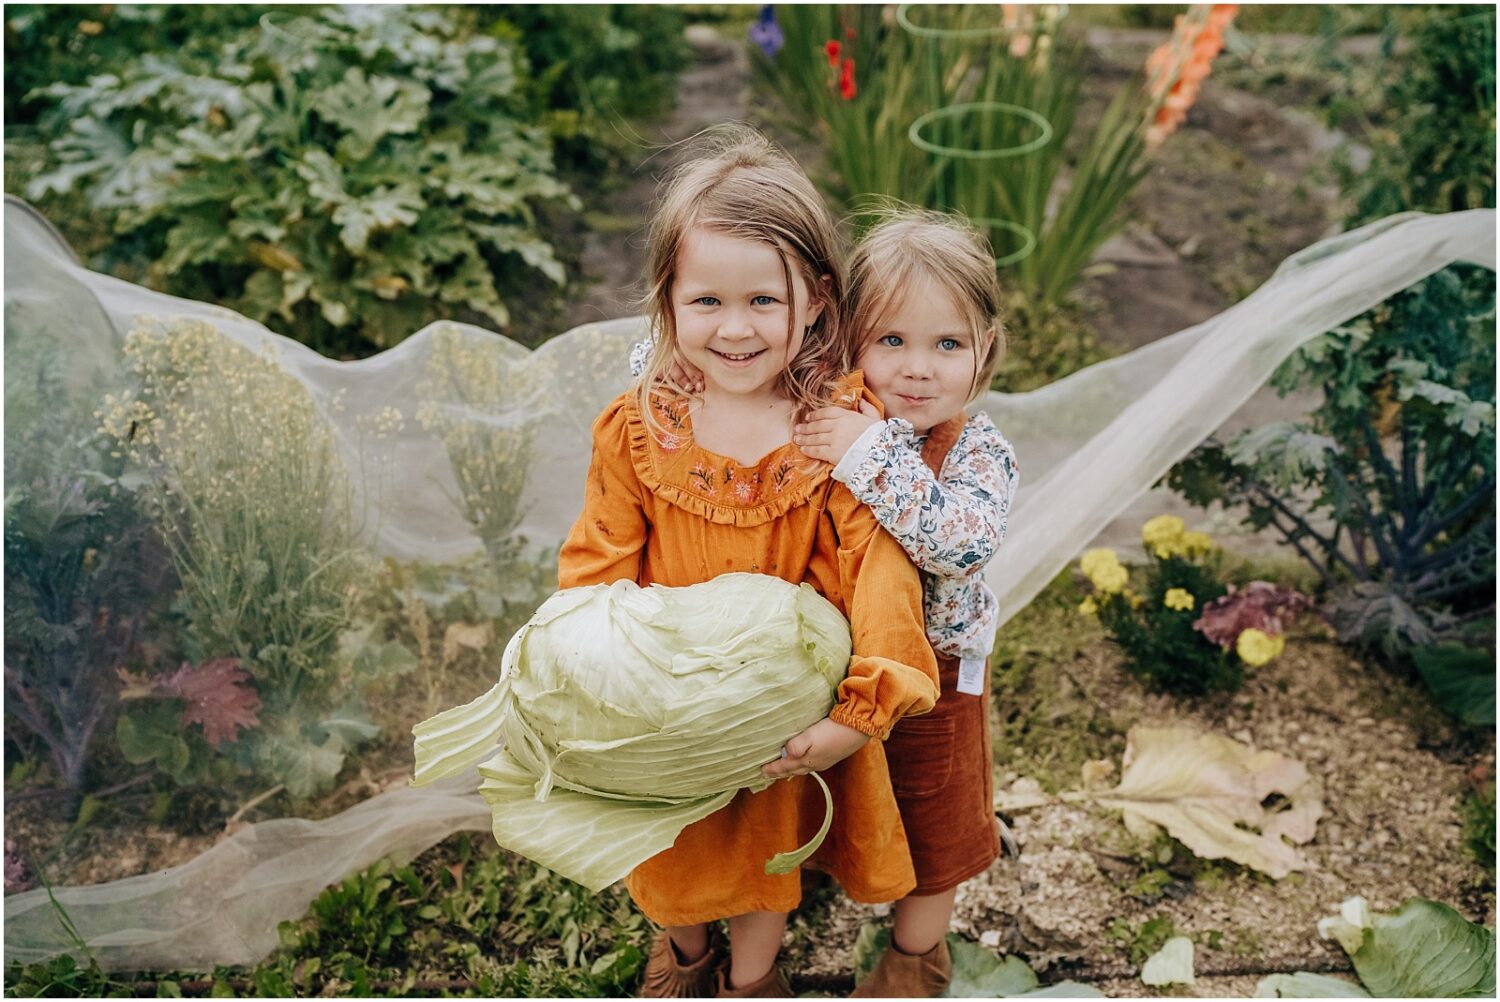 Edmotnon family photographer kids holding a cabbage